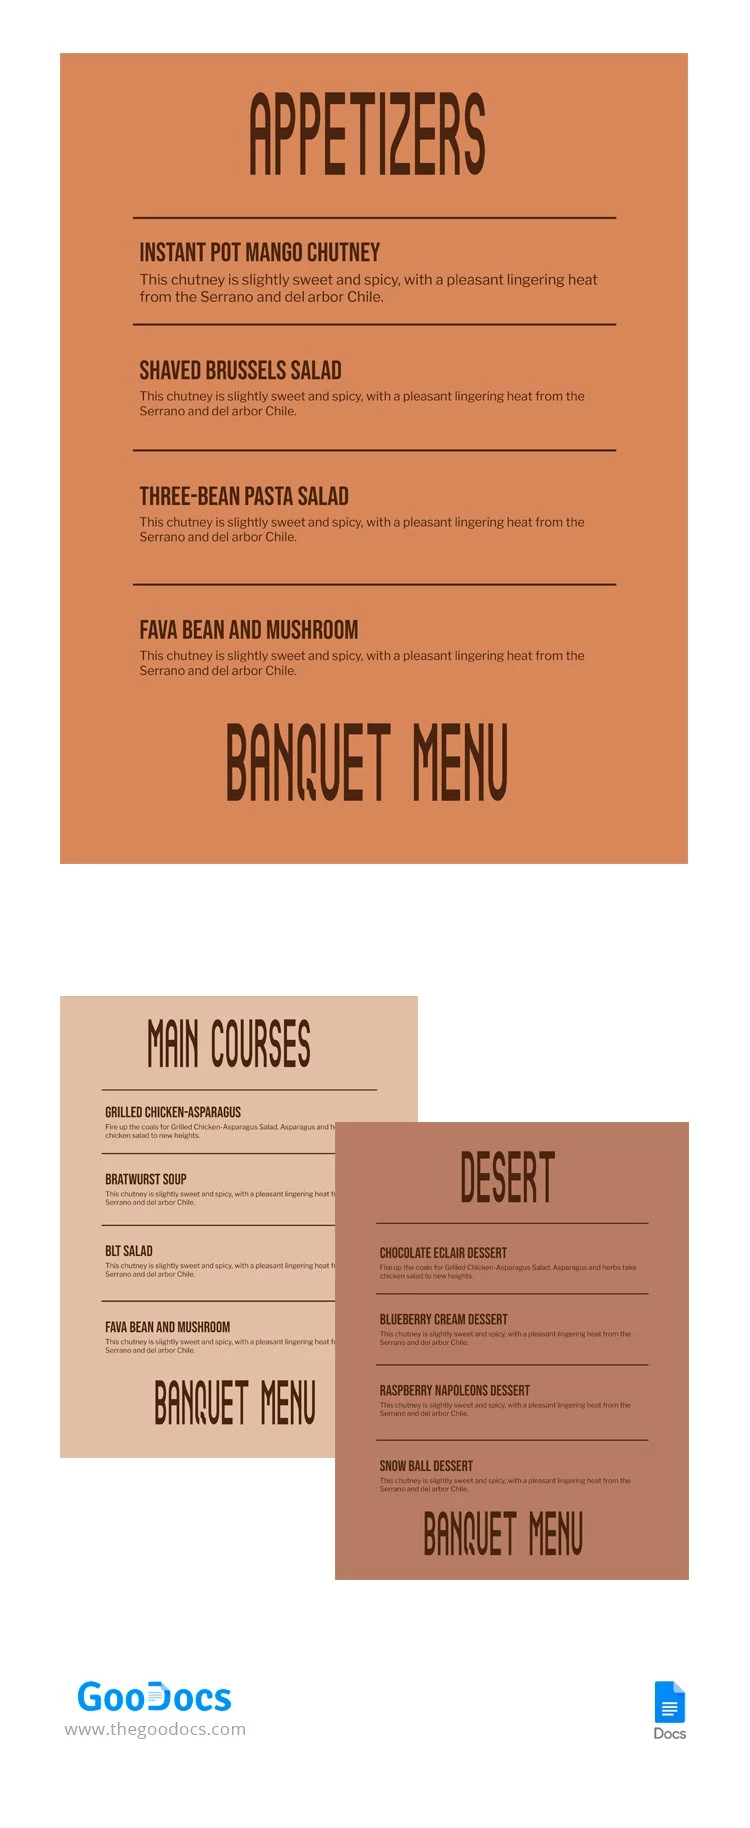 Menu du restaurant Banquet - free Google Docs Template - 10064444